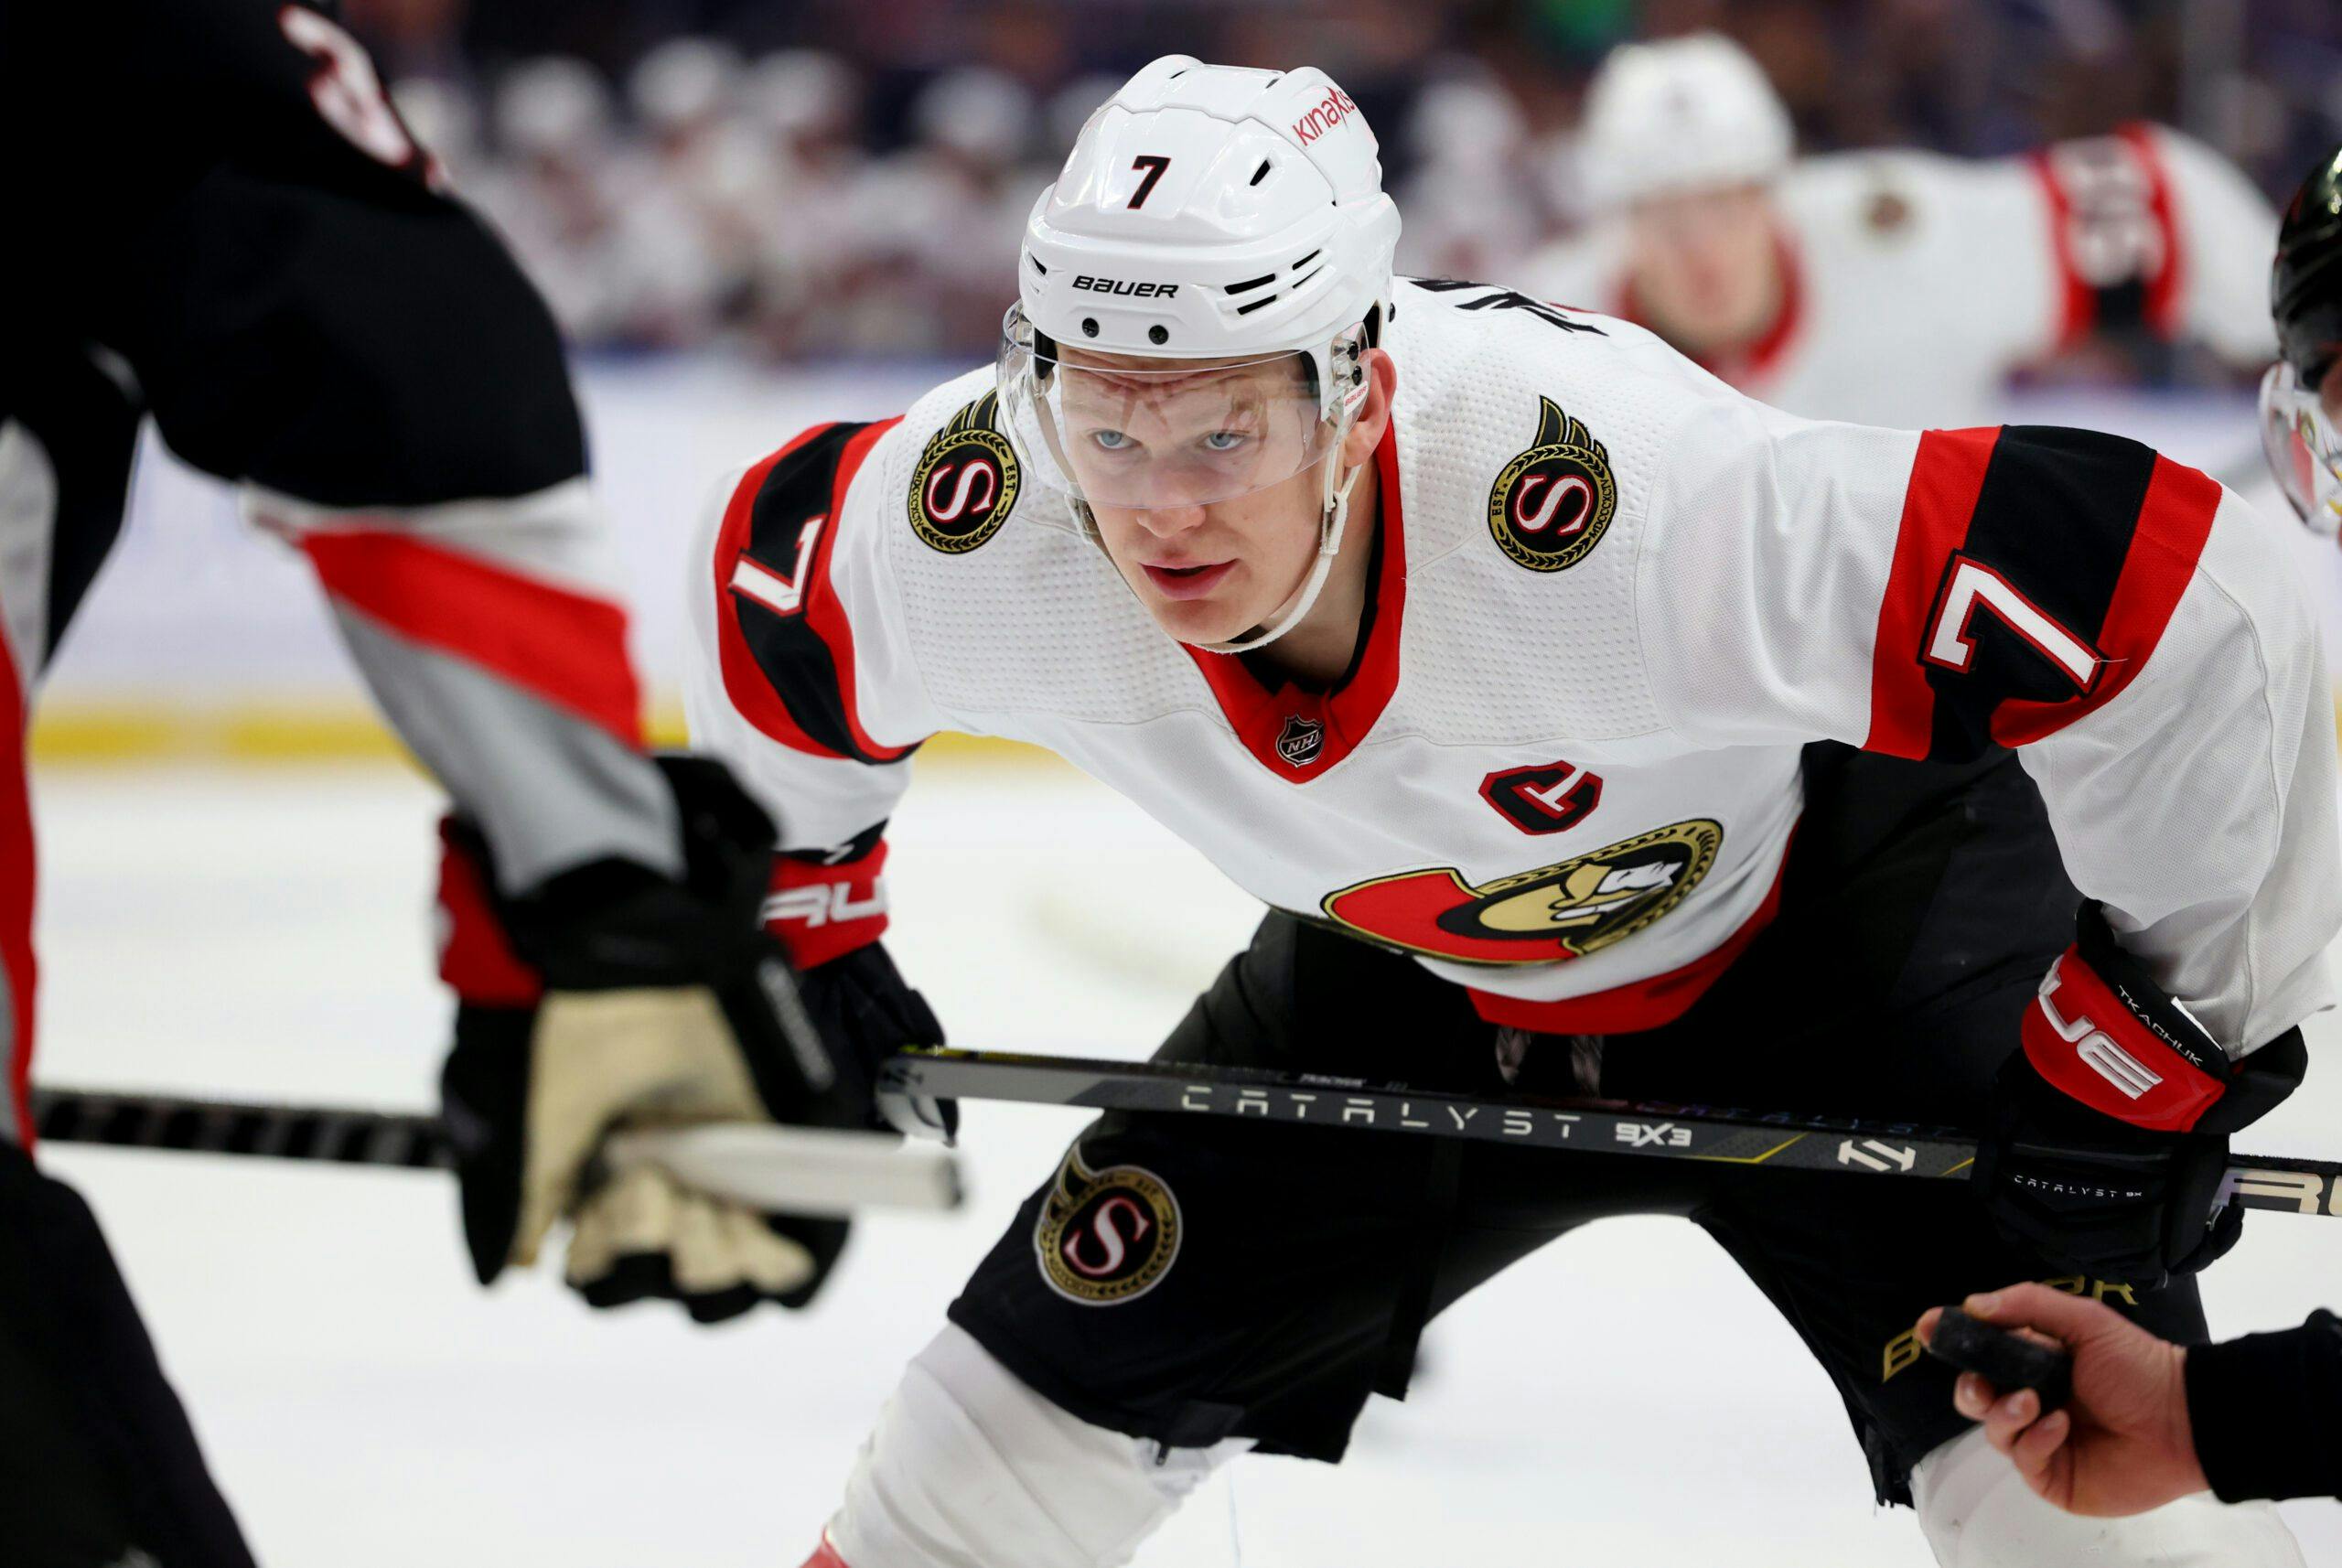 Ottawa Senators sign forward Vladimir Tarasenko to one-year